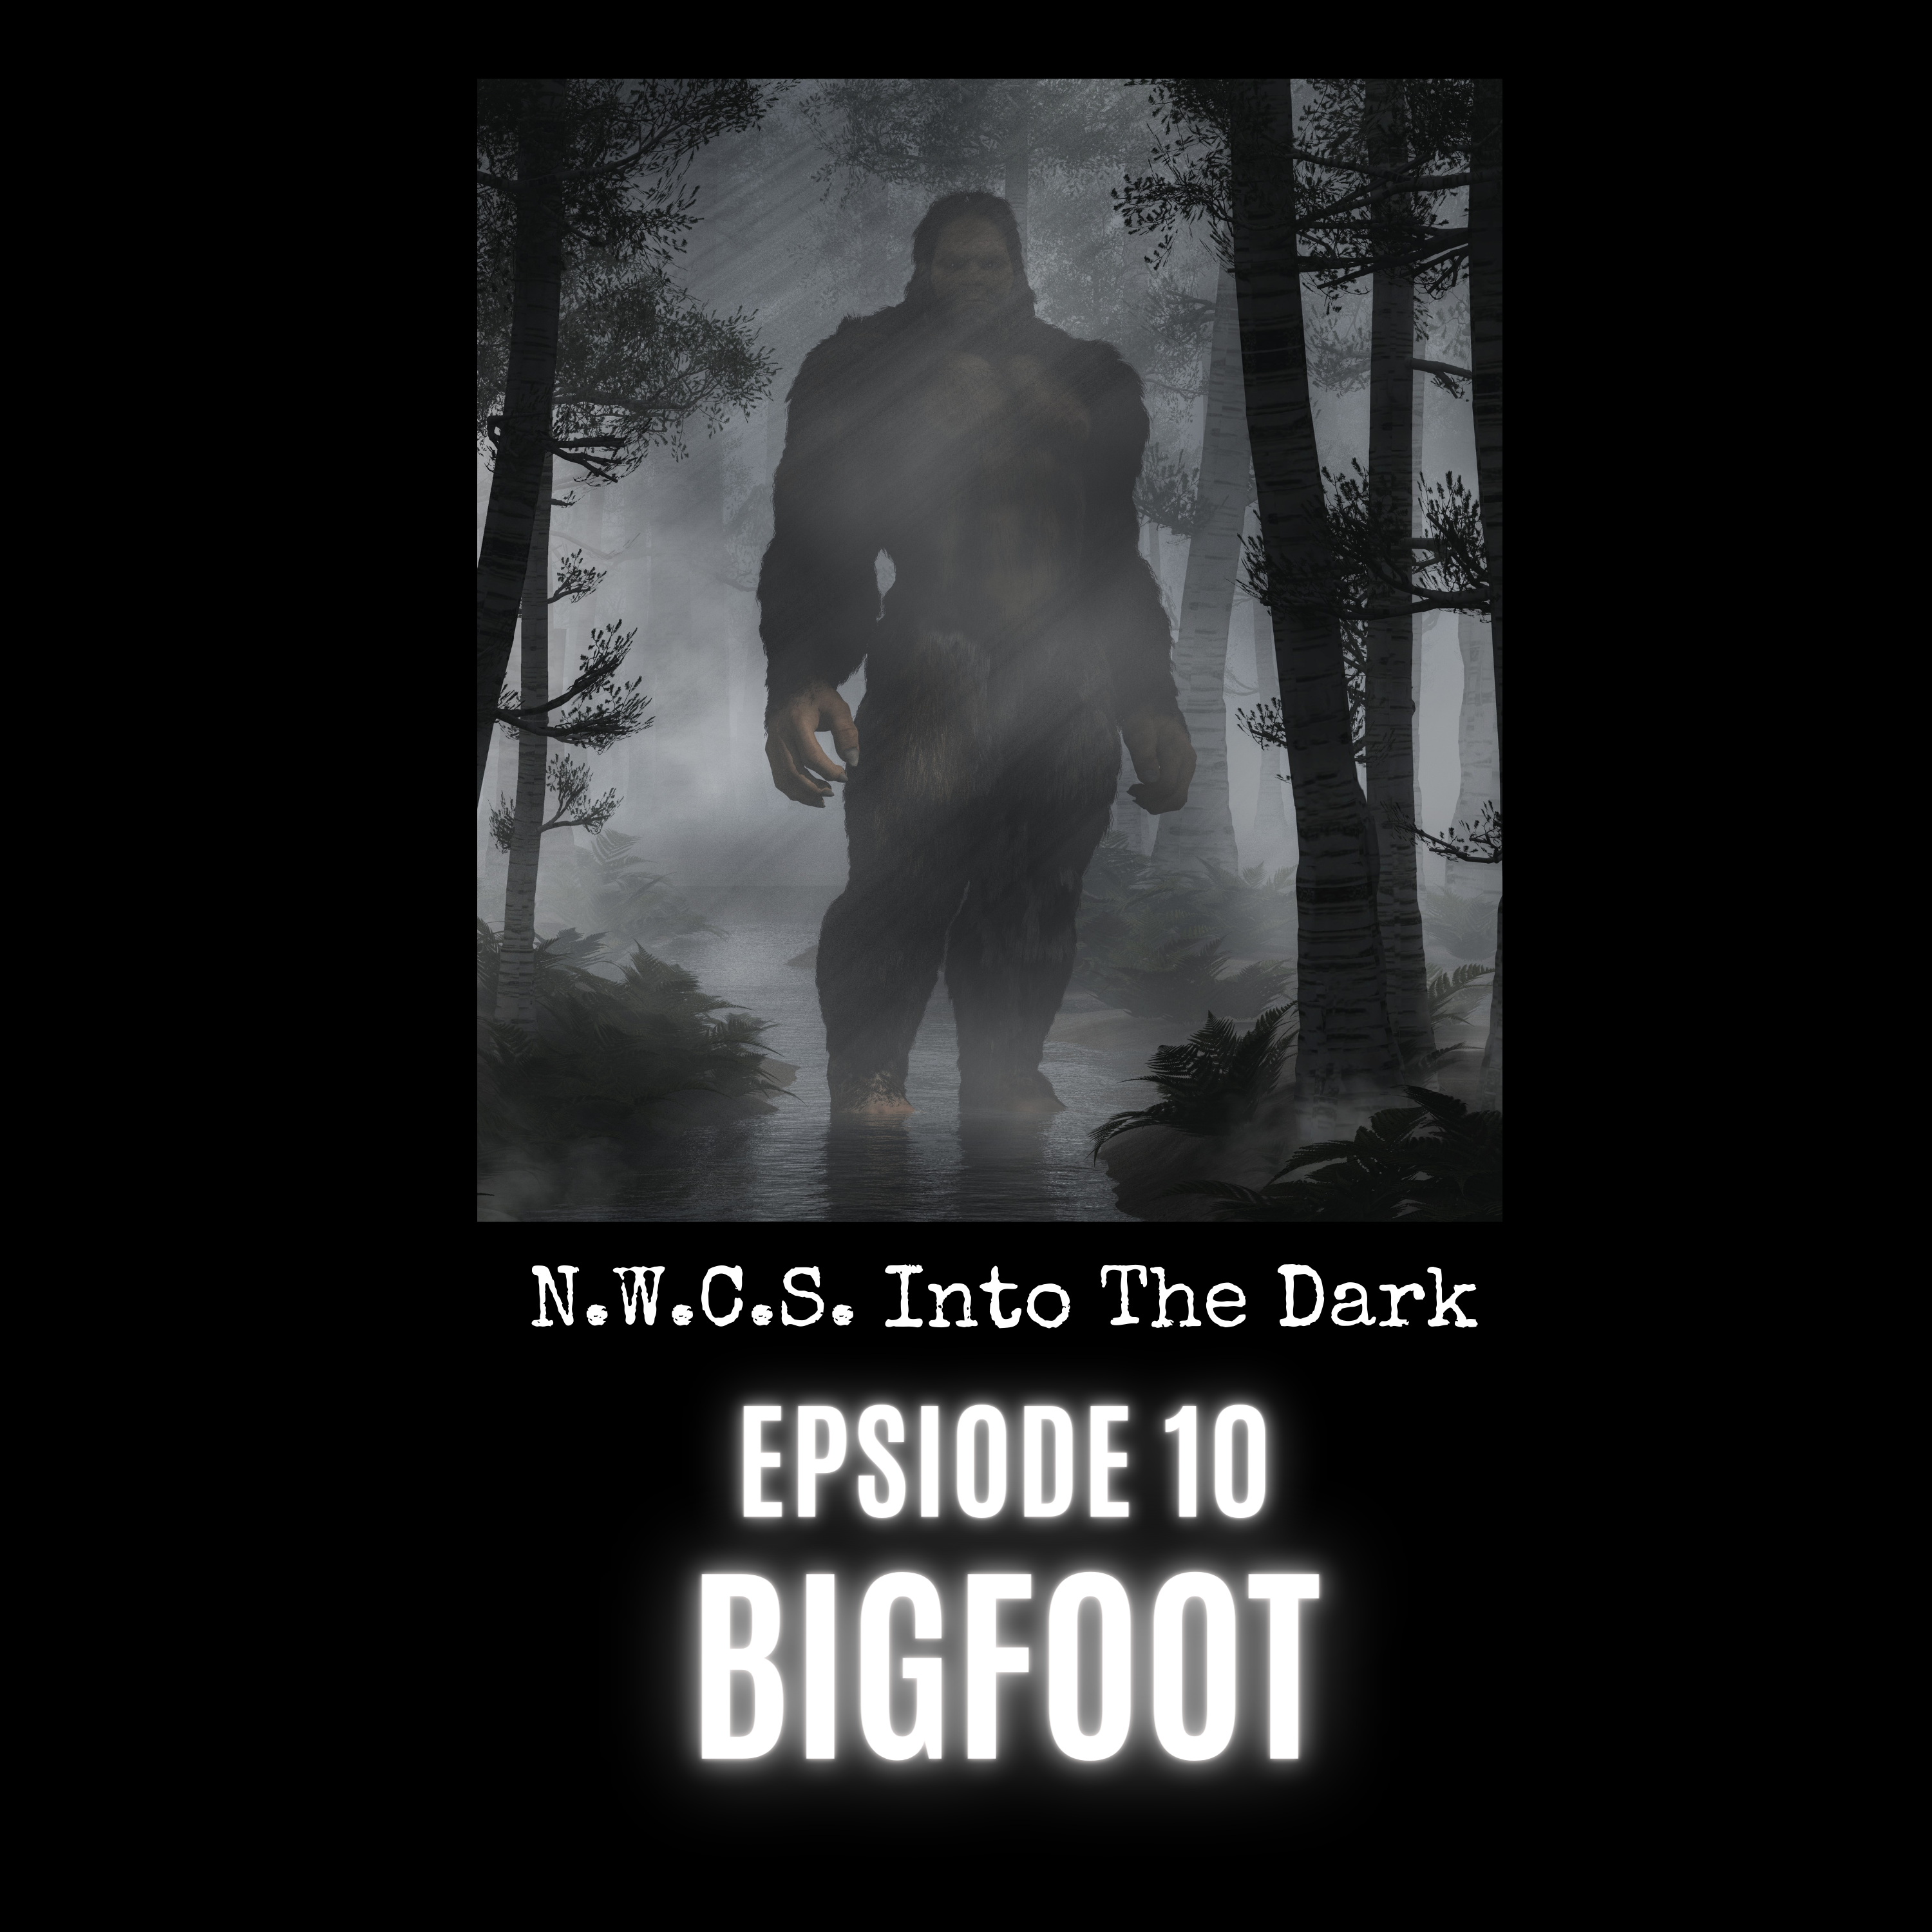 N.W.C.S. Into The Dark Episode 10 BIGfoot